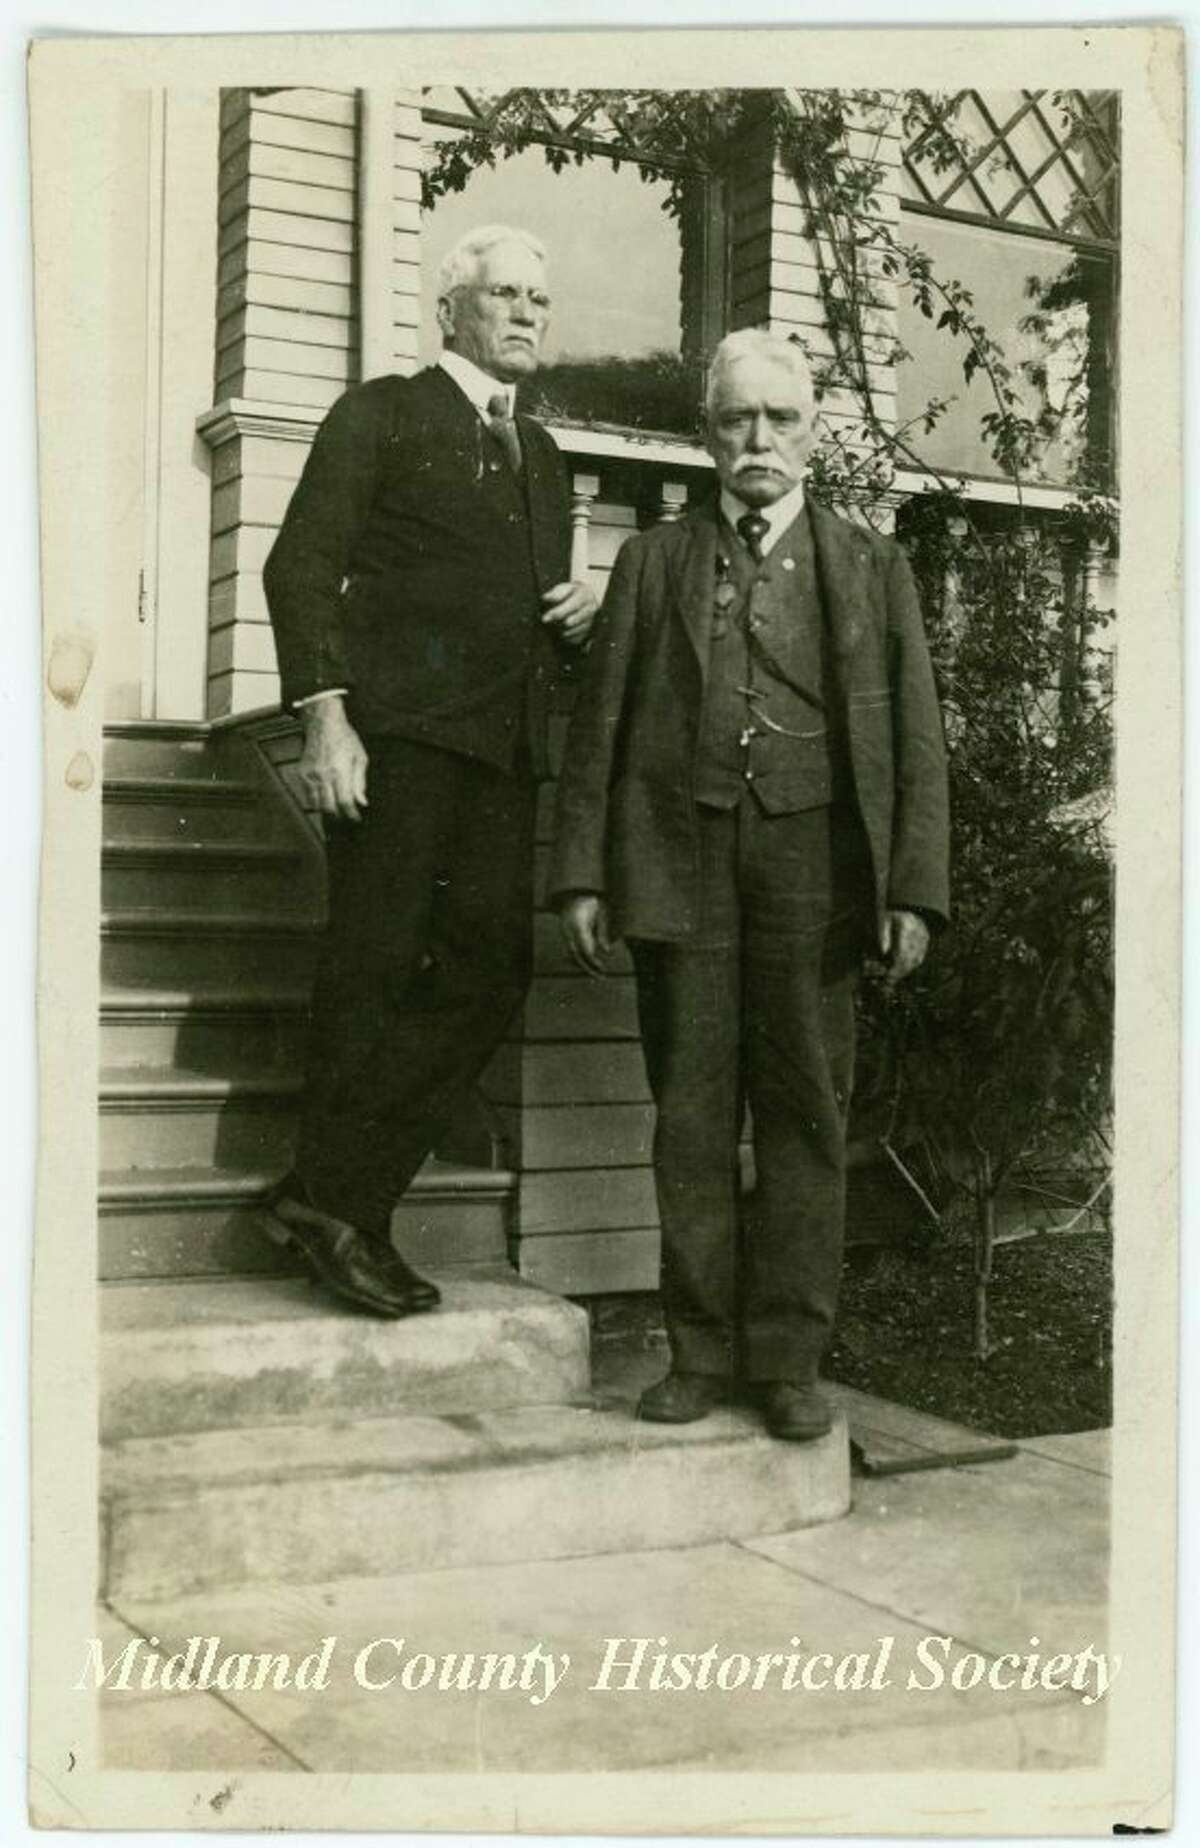 William and James Reardon on Christmas Day 1920. (Photo provided)